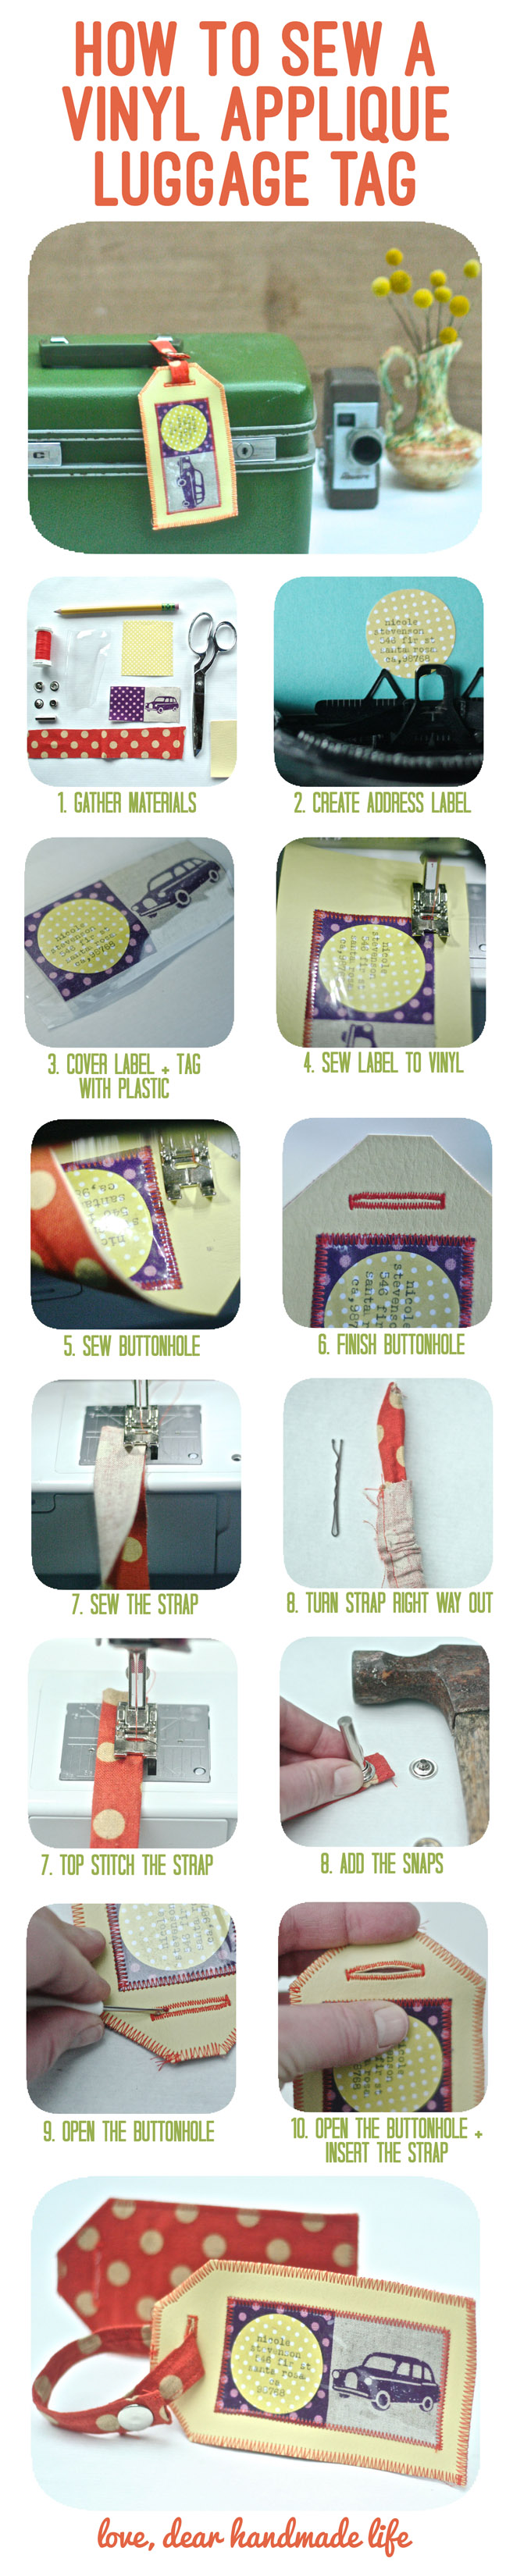 a-luggage-tag-dear-handmade-life-how-to-sew-craft-diy